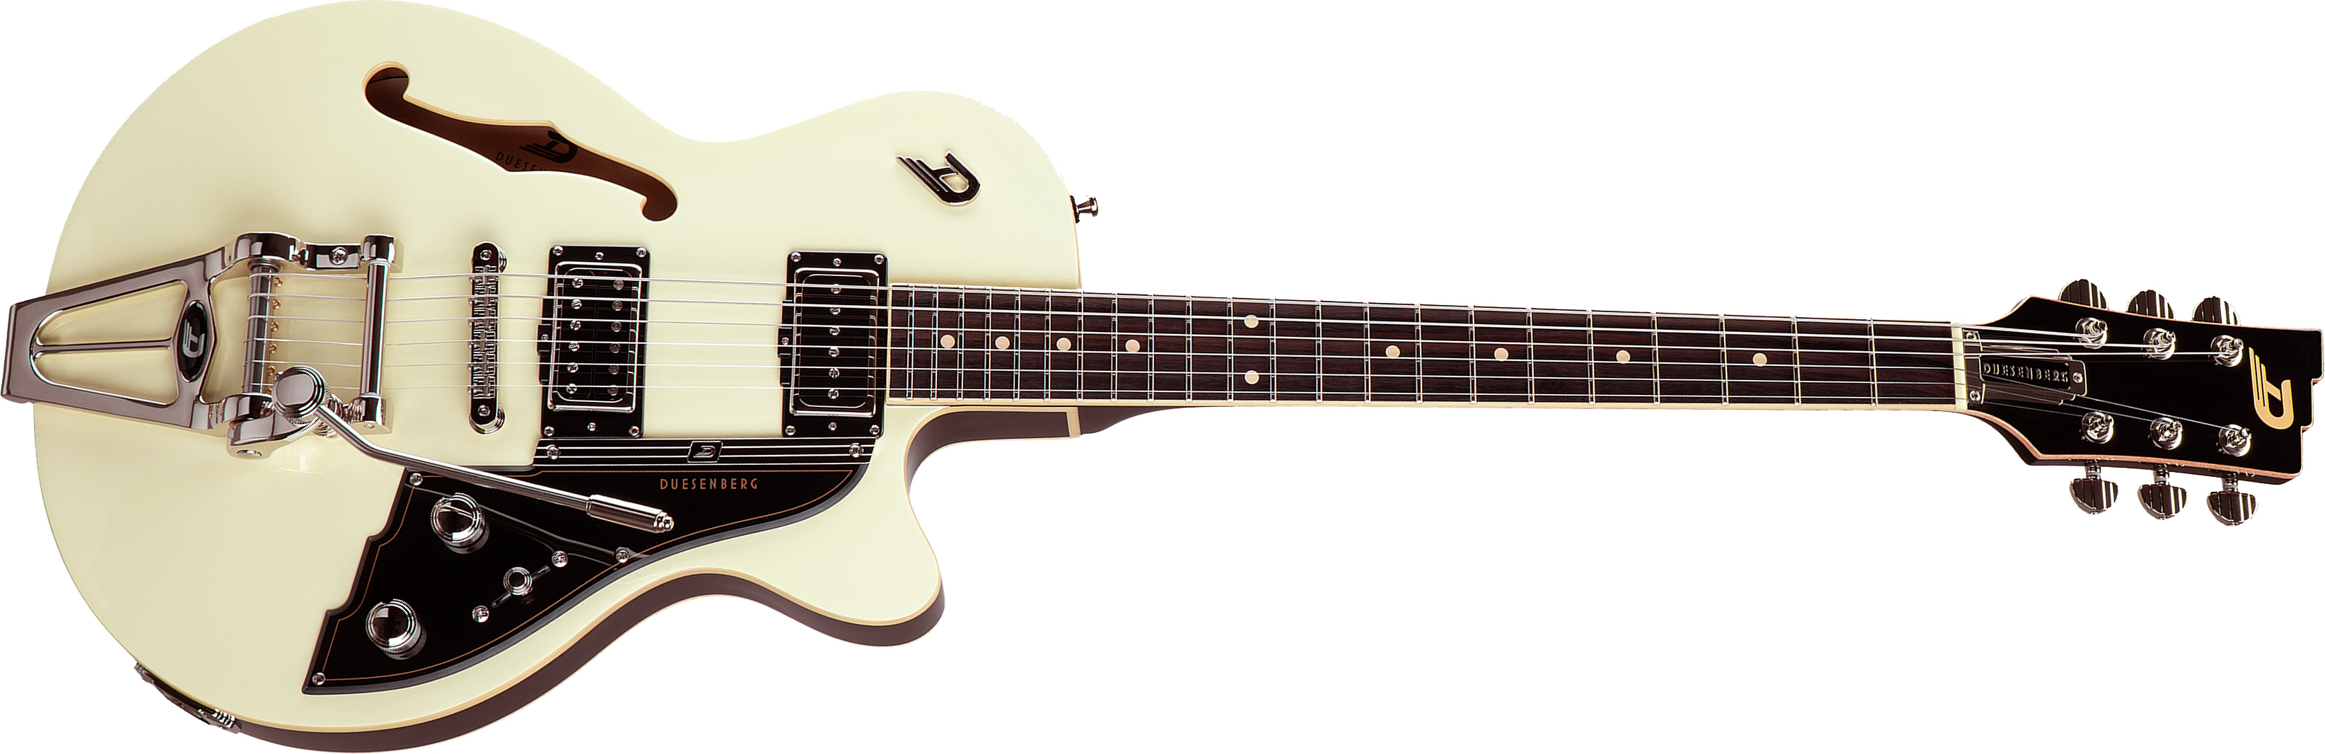 Duesenberg Starplayer Tv Hs Trem Rw - Vintage White - Semi-hollow electric guitar - Main picture